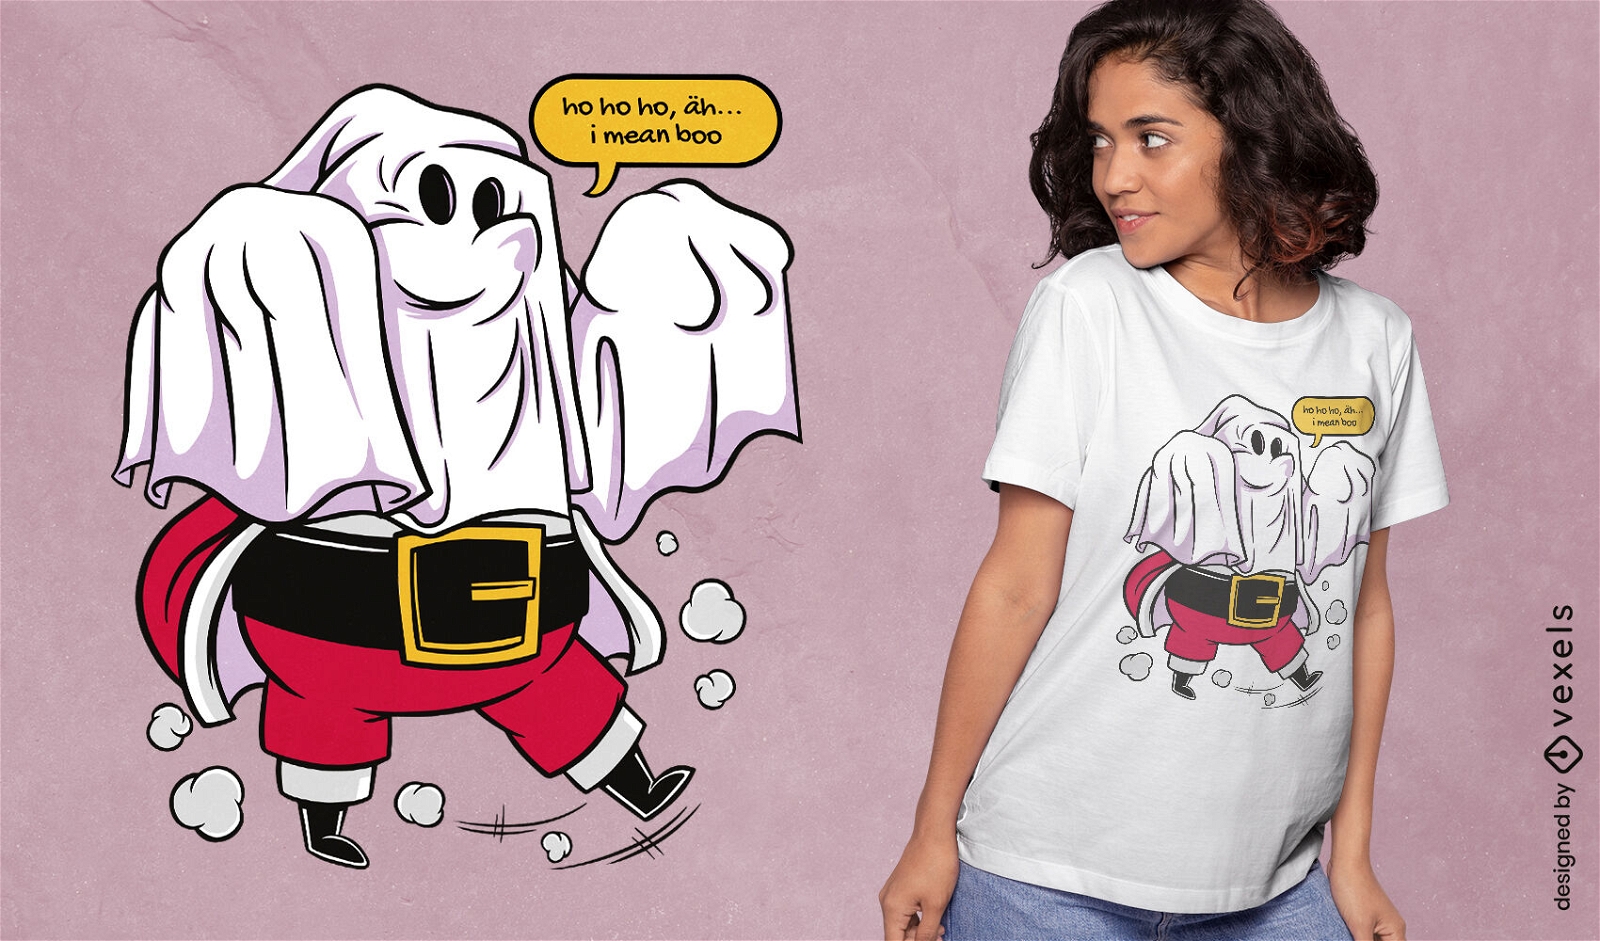 Ghost santa claus funny t-shirt design